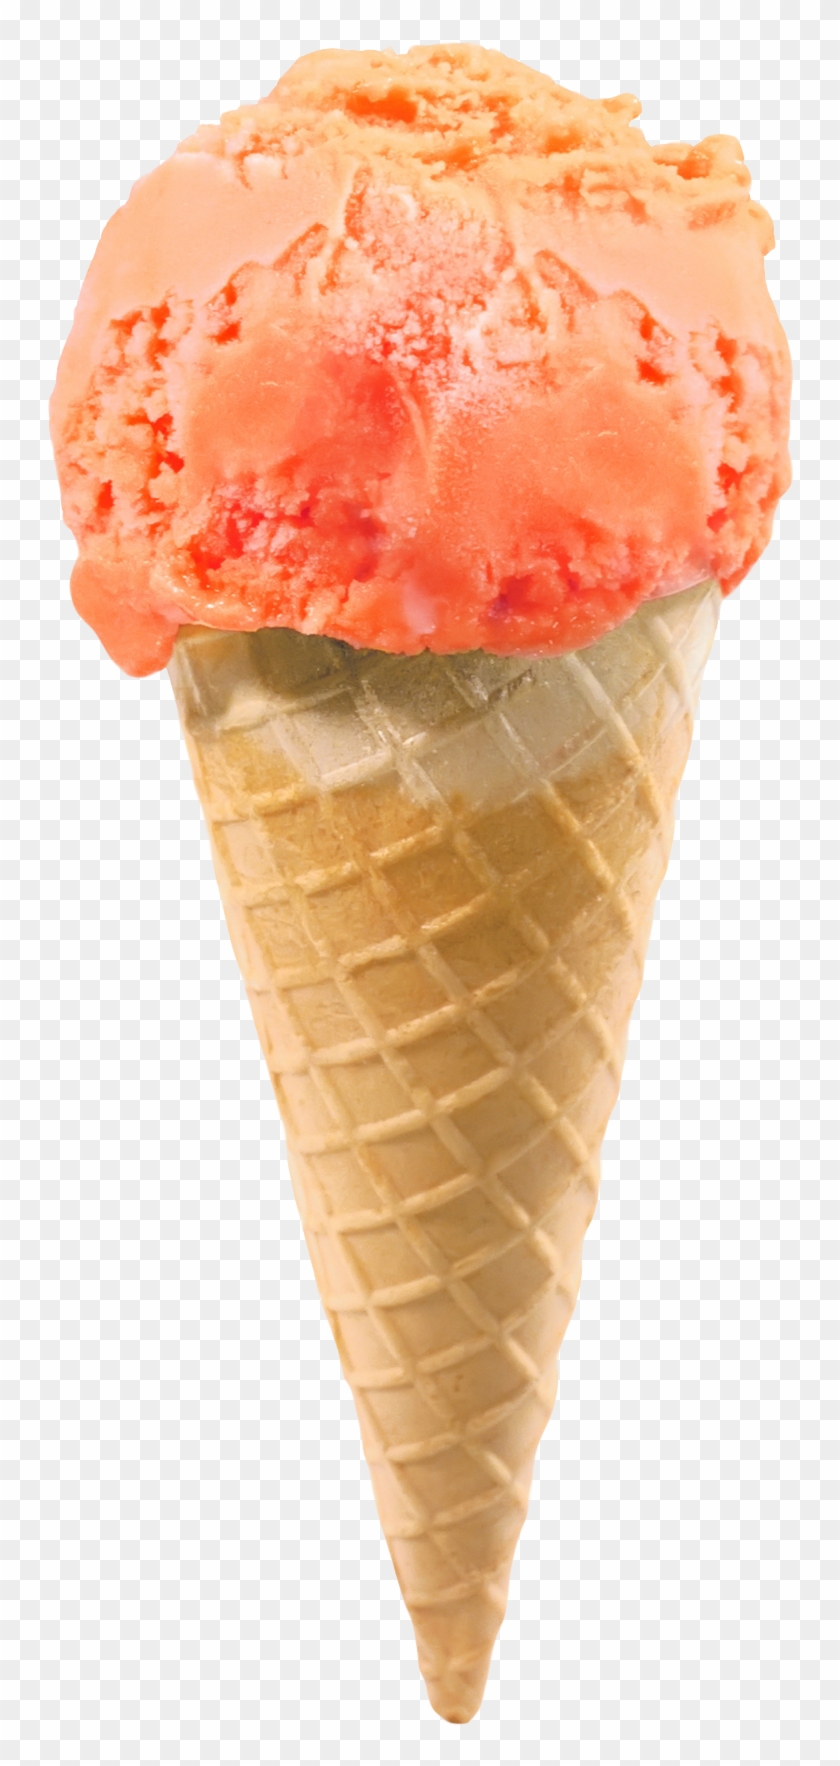 Ice Cream Cone - Ice Cream Cone Png #547051